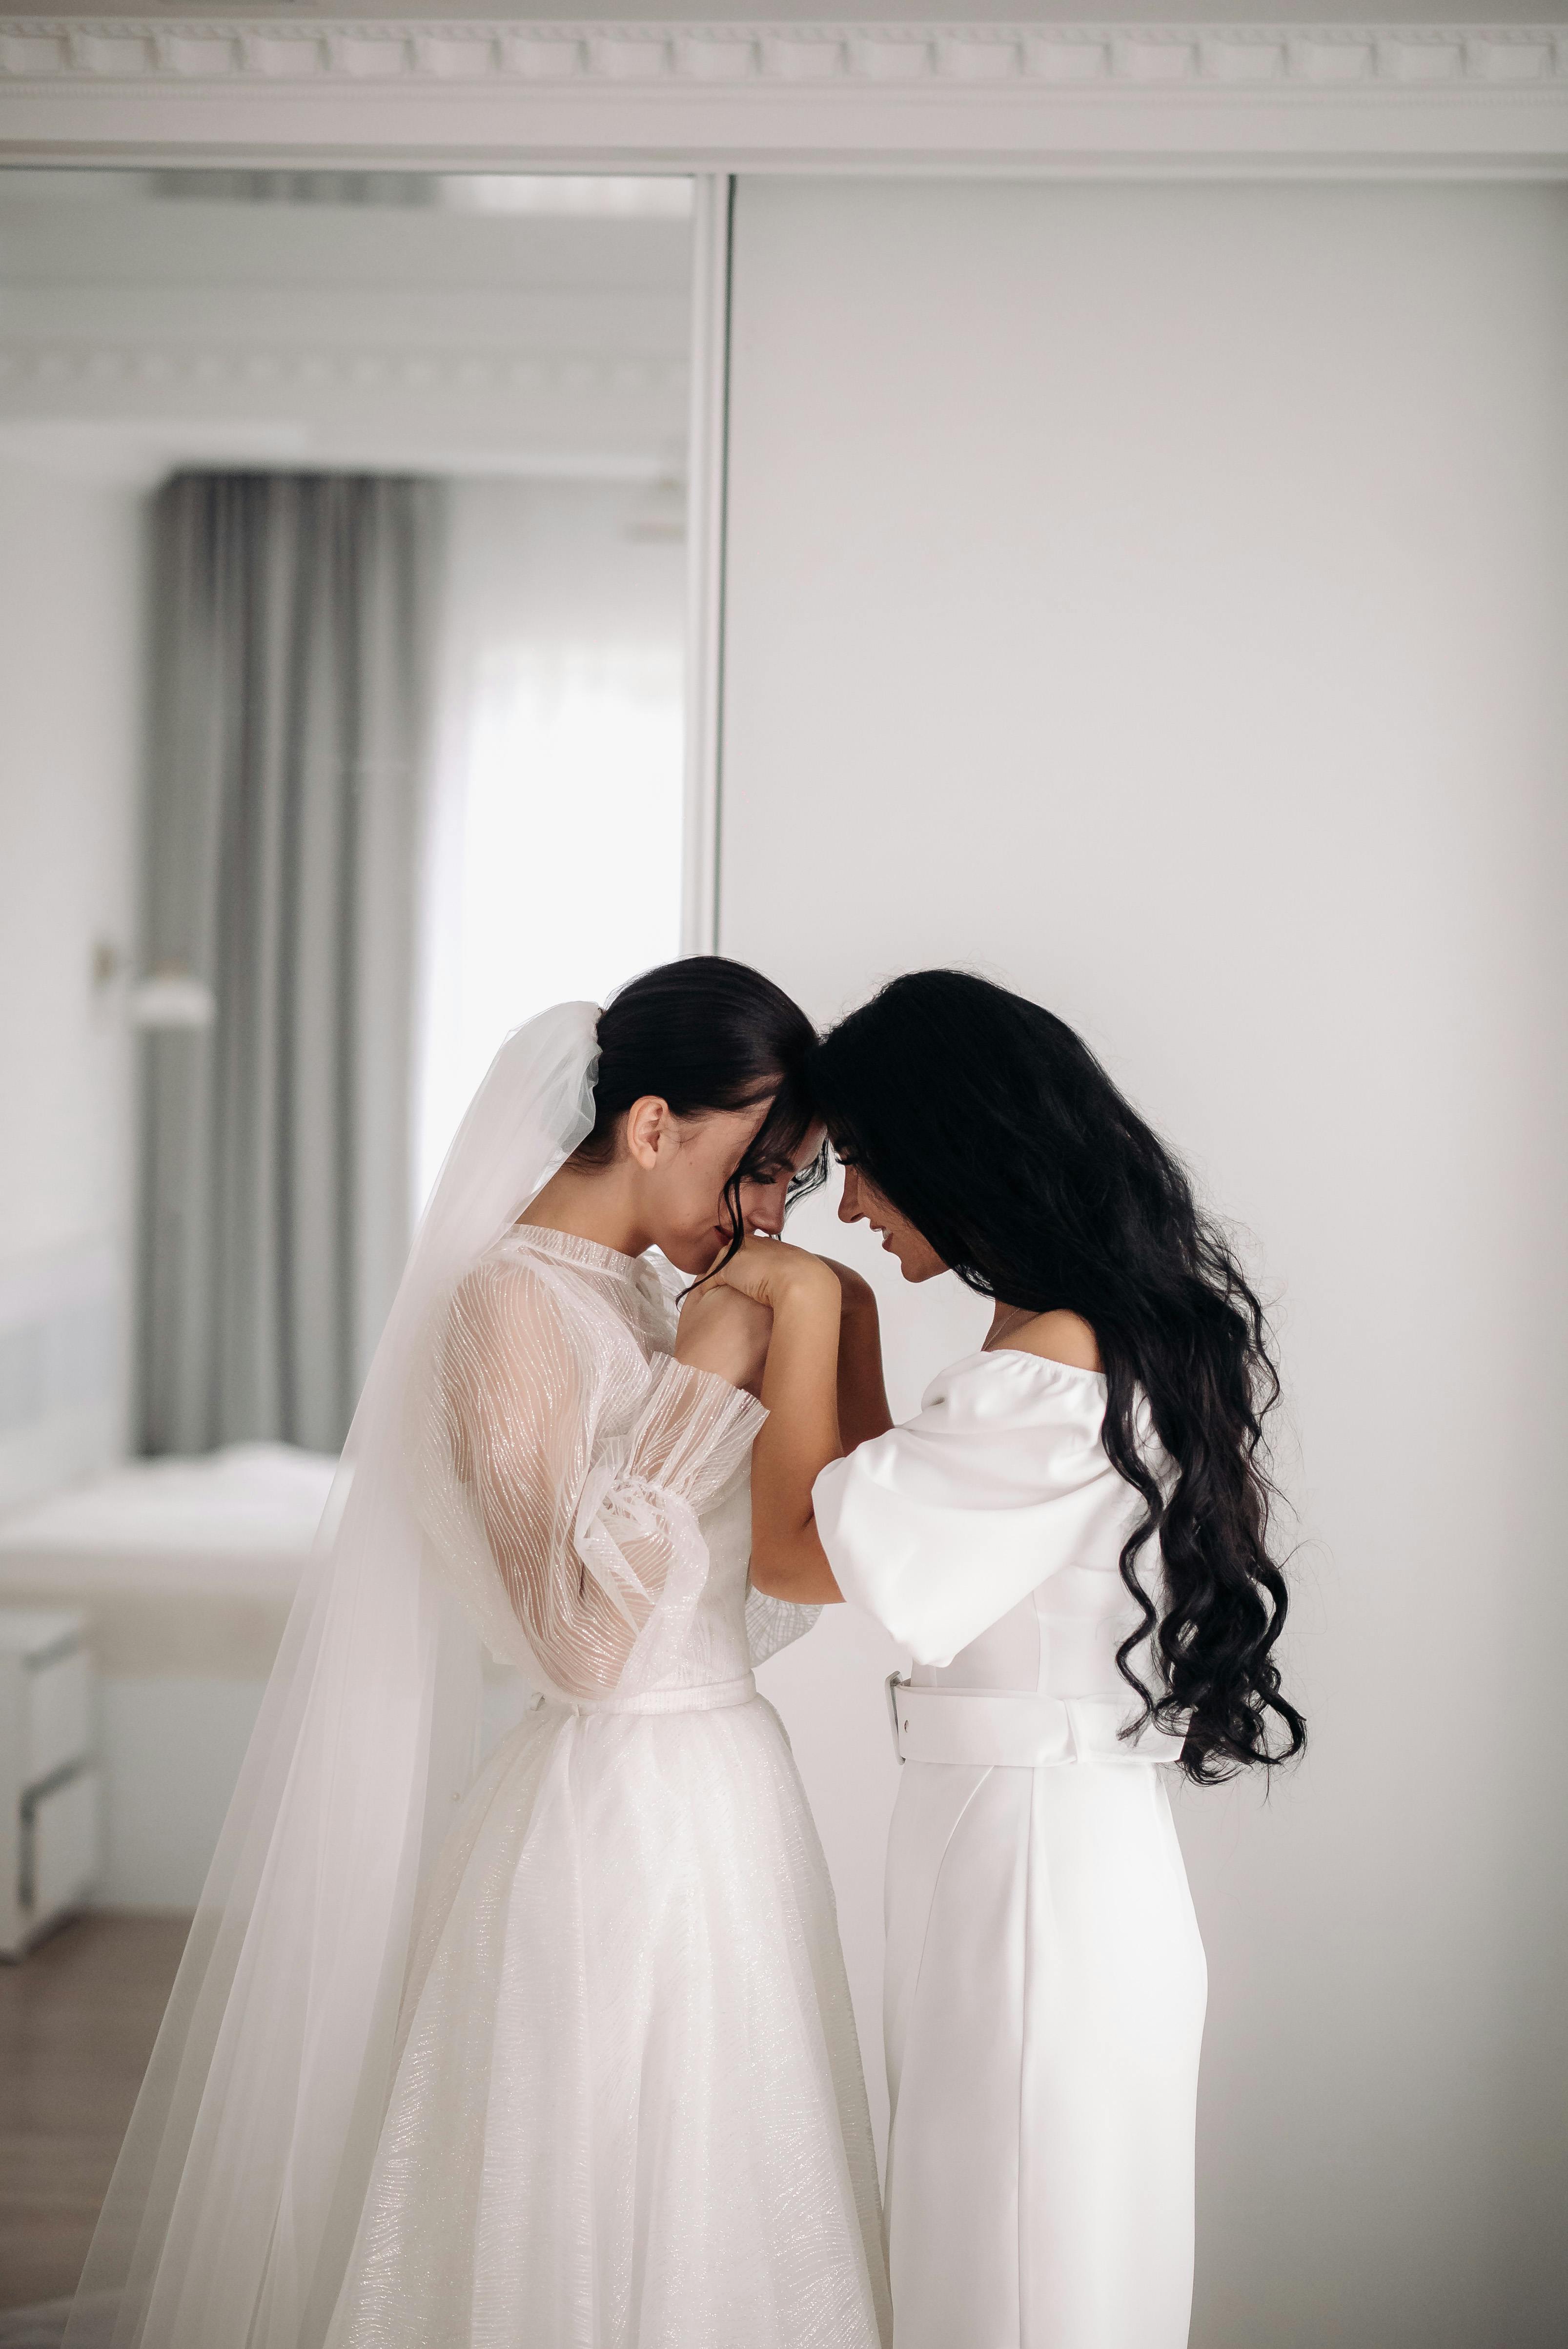 Bride in Wedding Dress · Free Stock Photo